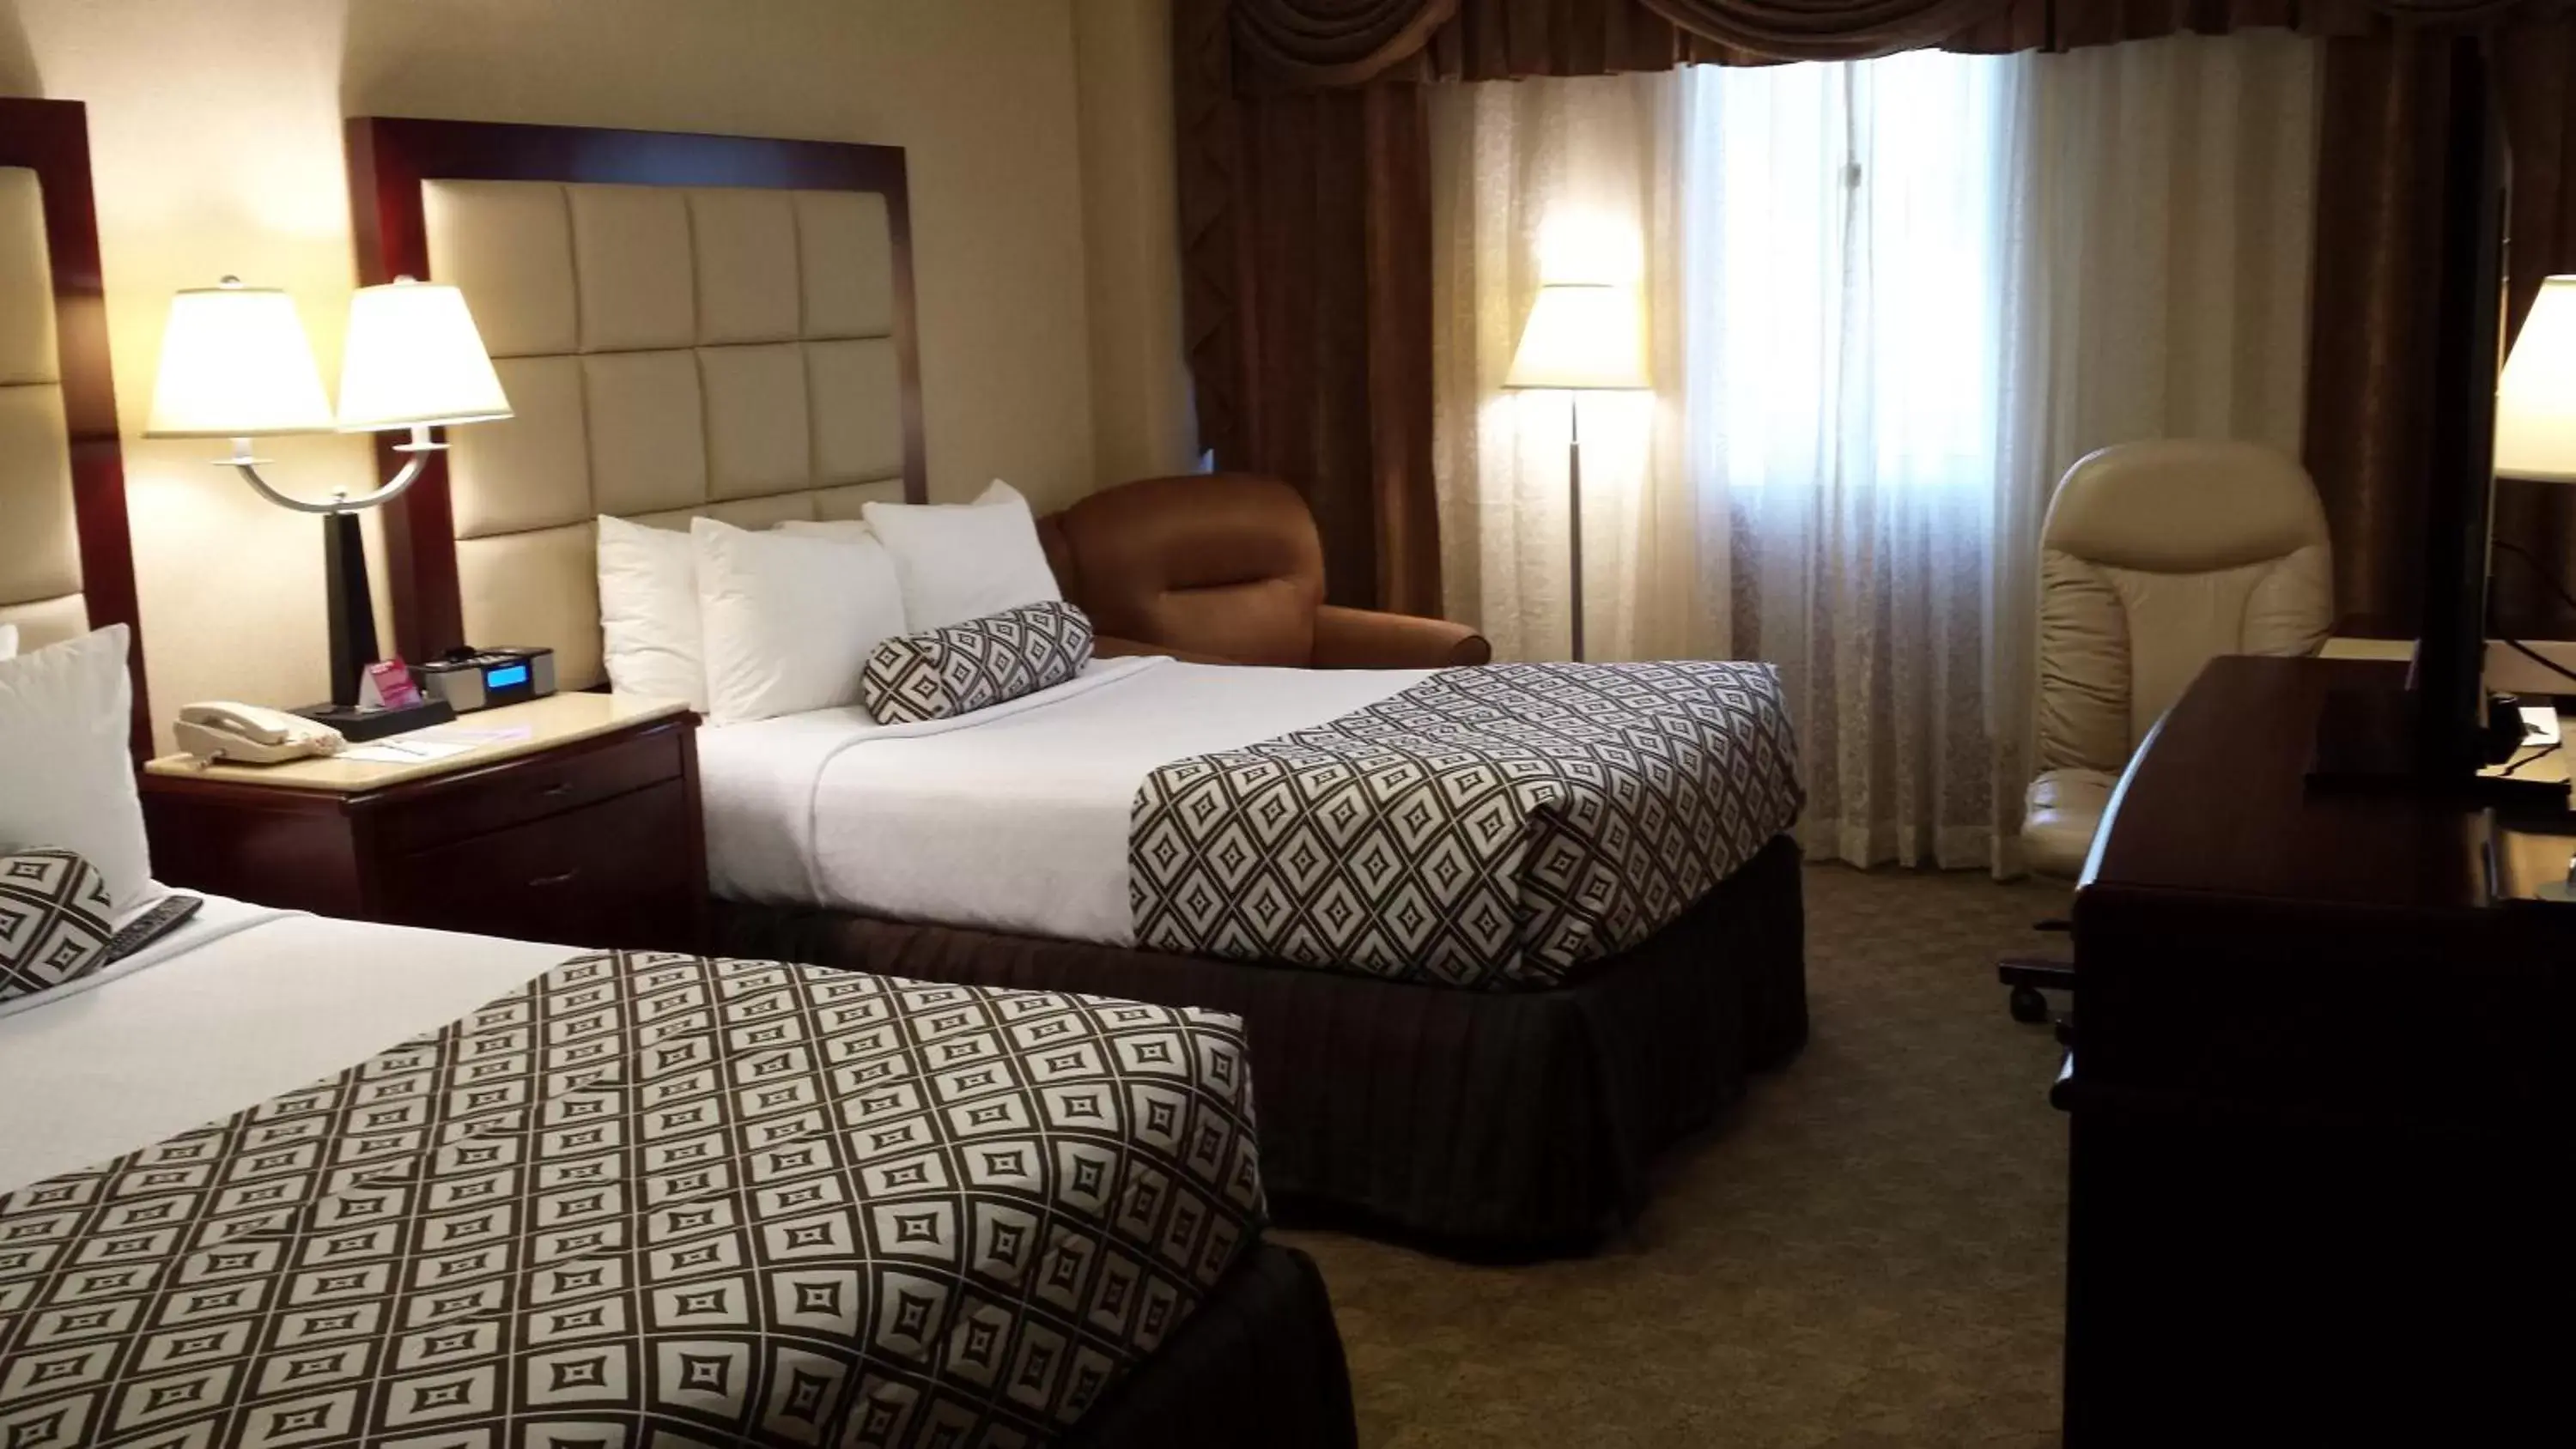 Bed, Room Photo in Wyndham Houston near NRG Park - Medical Center